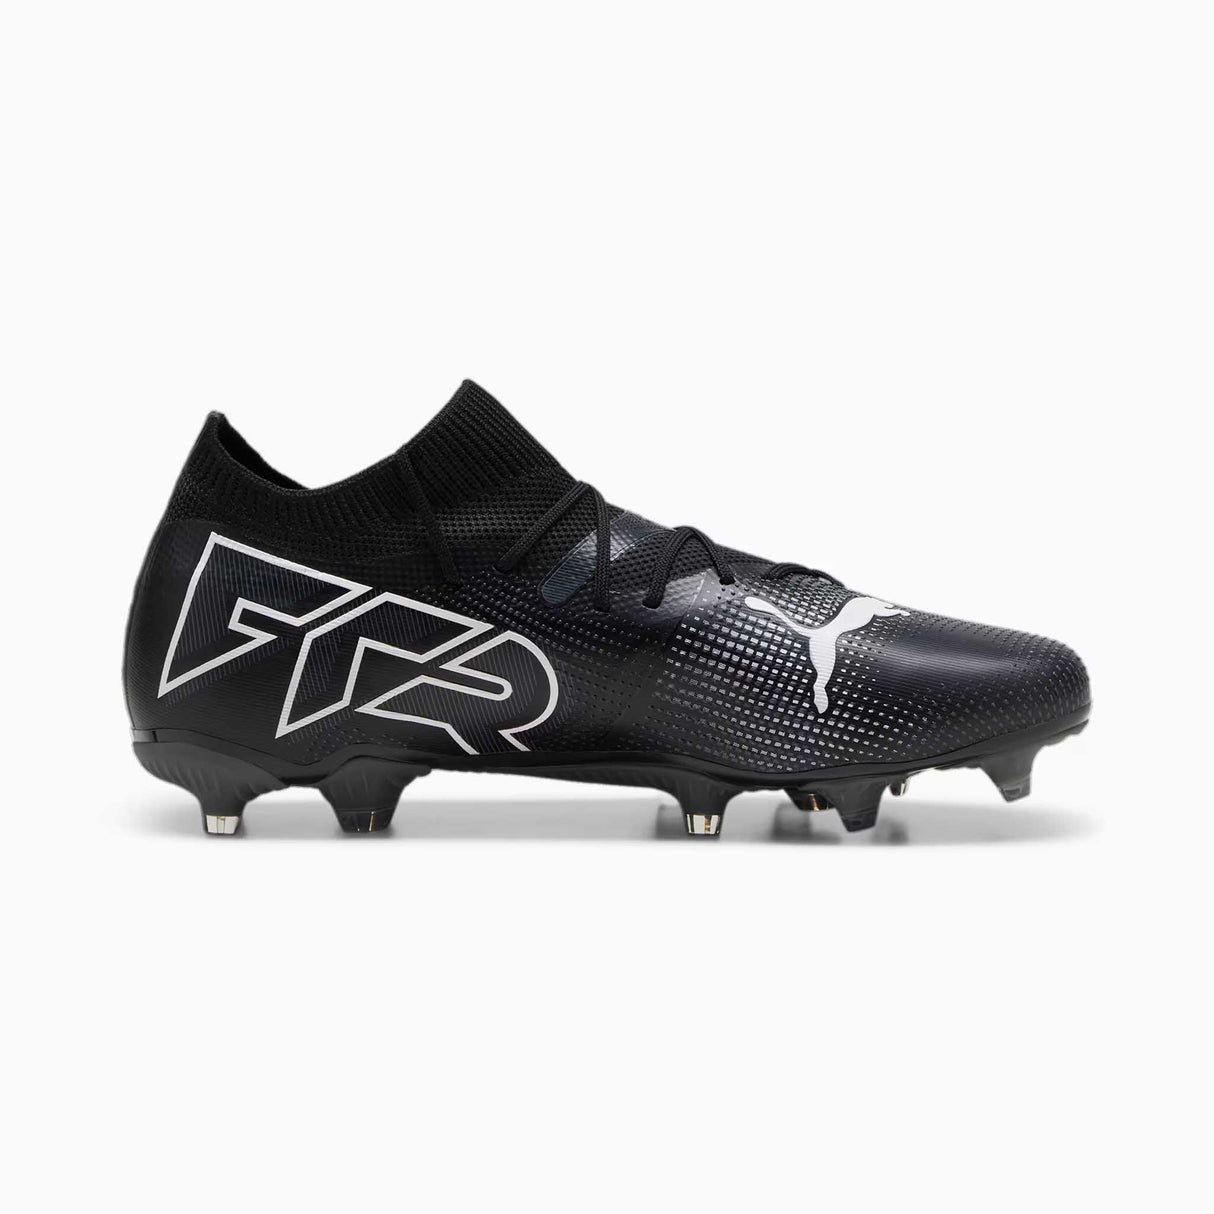 Puma Future 7 Match FG/AG chaussures de soccer a crampons vue laterale - puma black / puma white